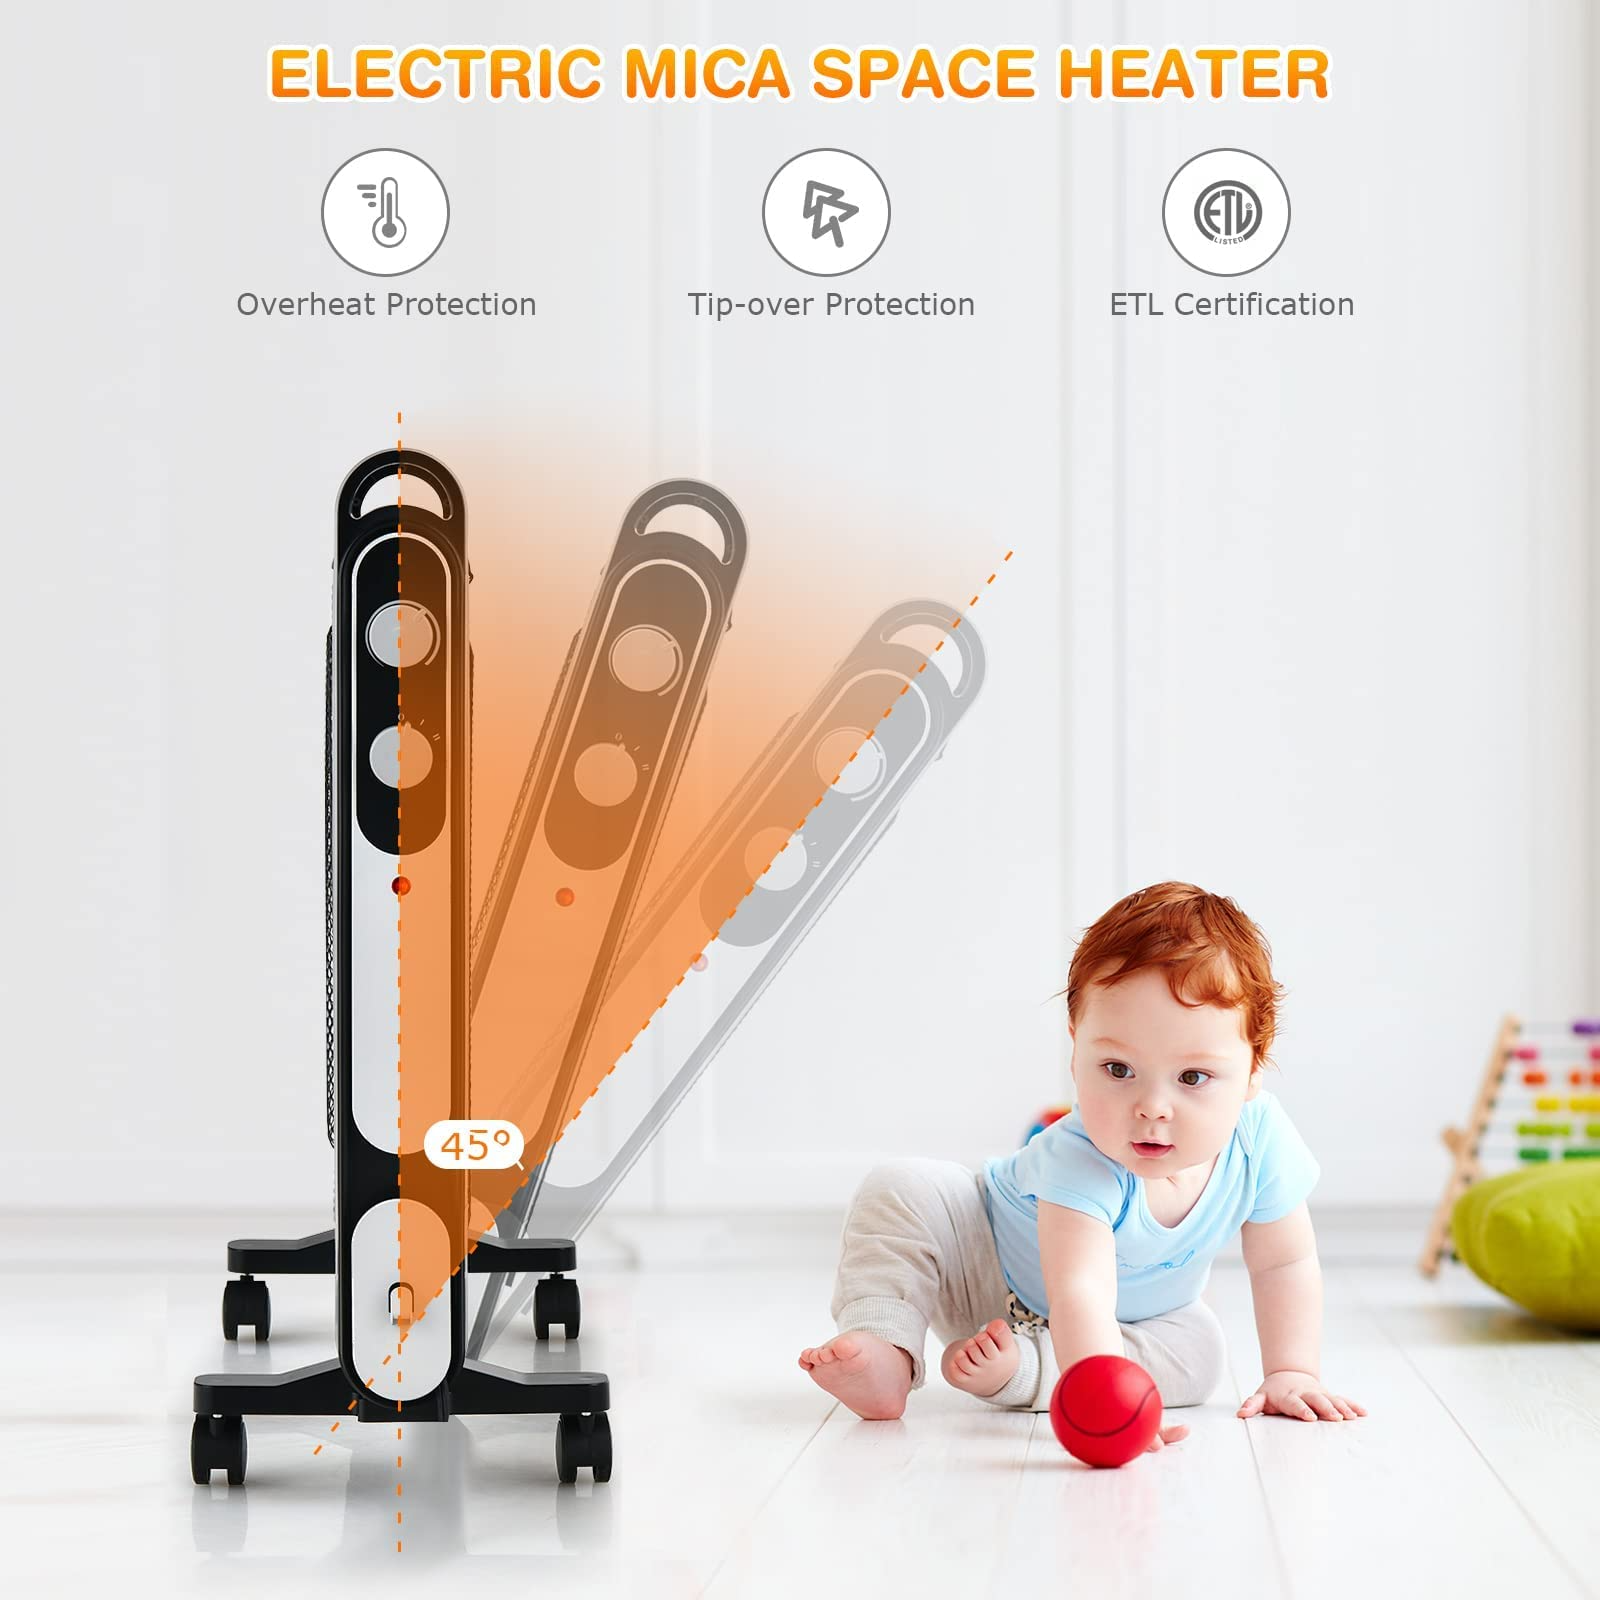  1500W Electric Mica Space Heater - Tangkula